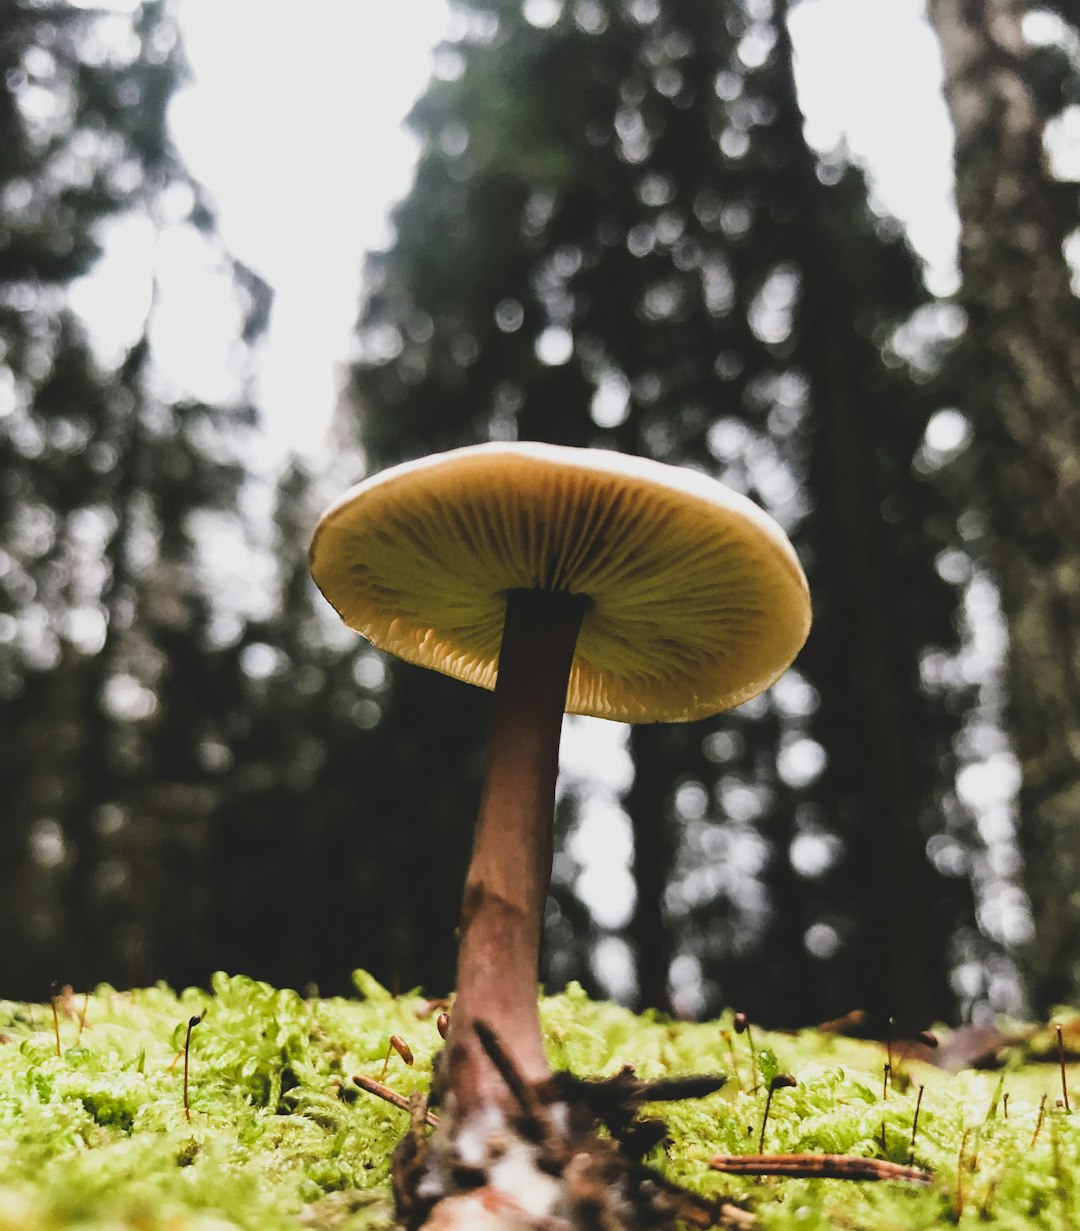 brown mushroom in green grass during daytime